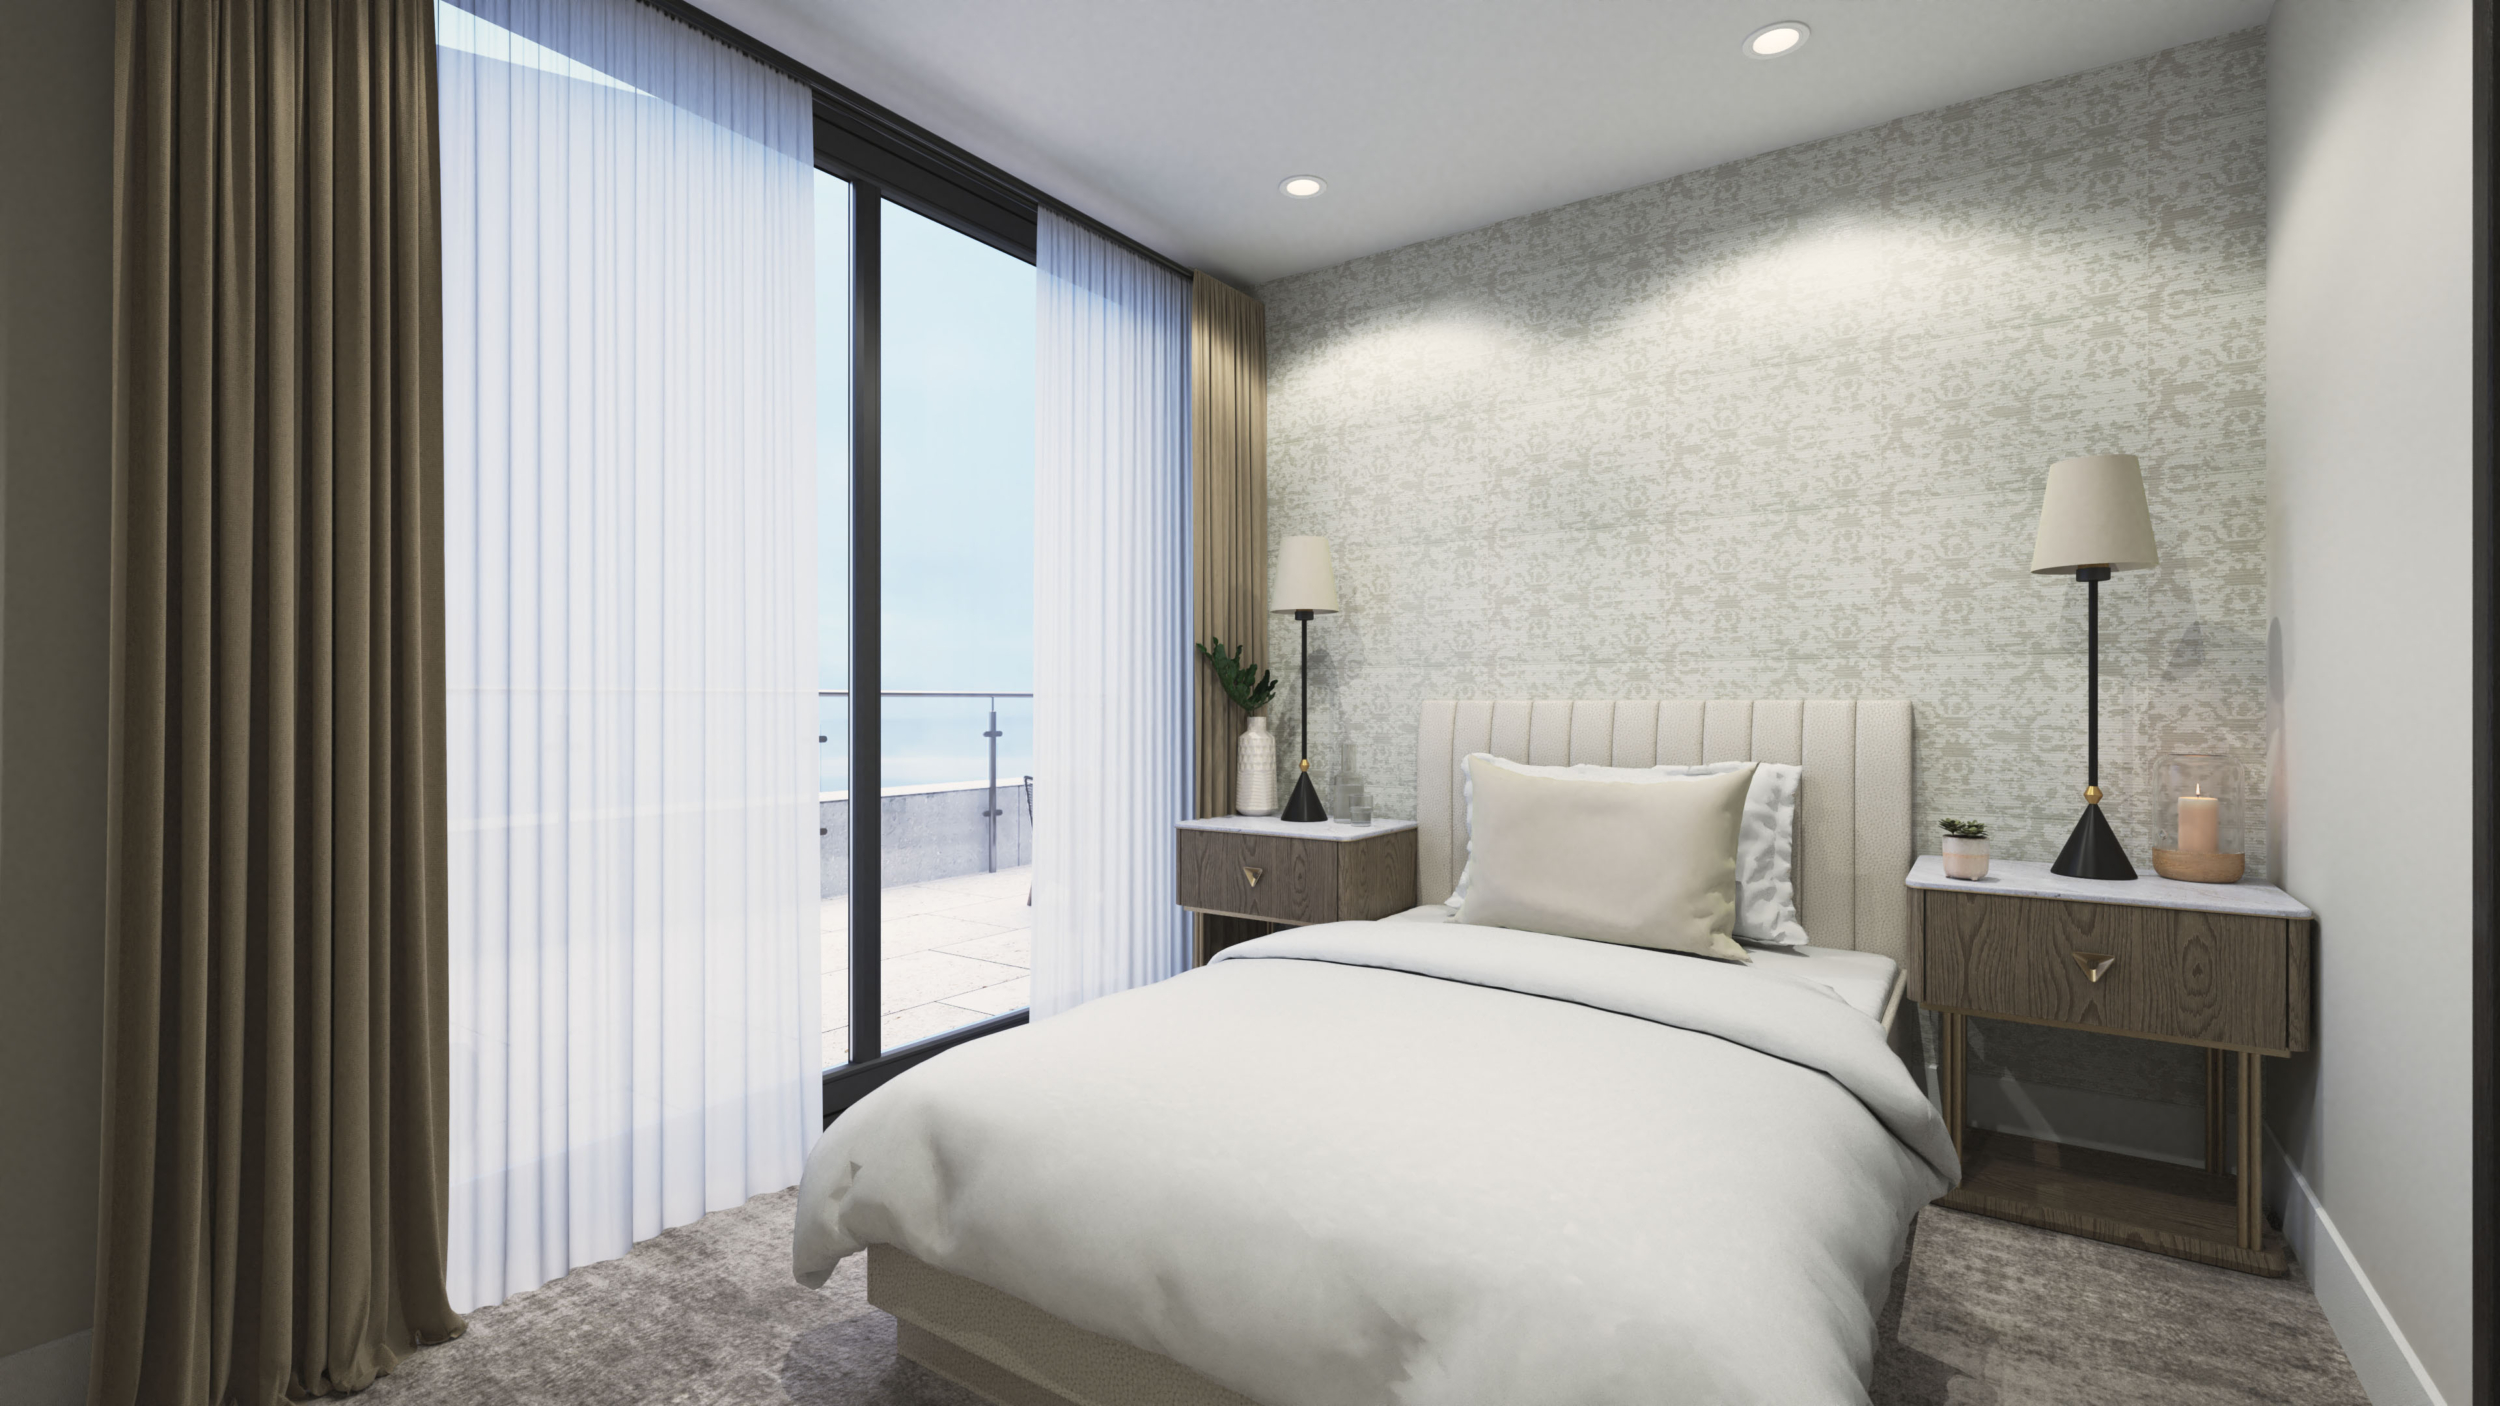 Luxury Penthouse Apartment, Bedroom Space CGI, Linear CGI Studio